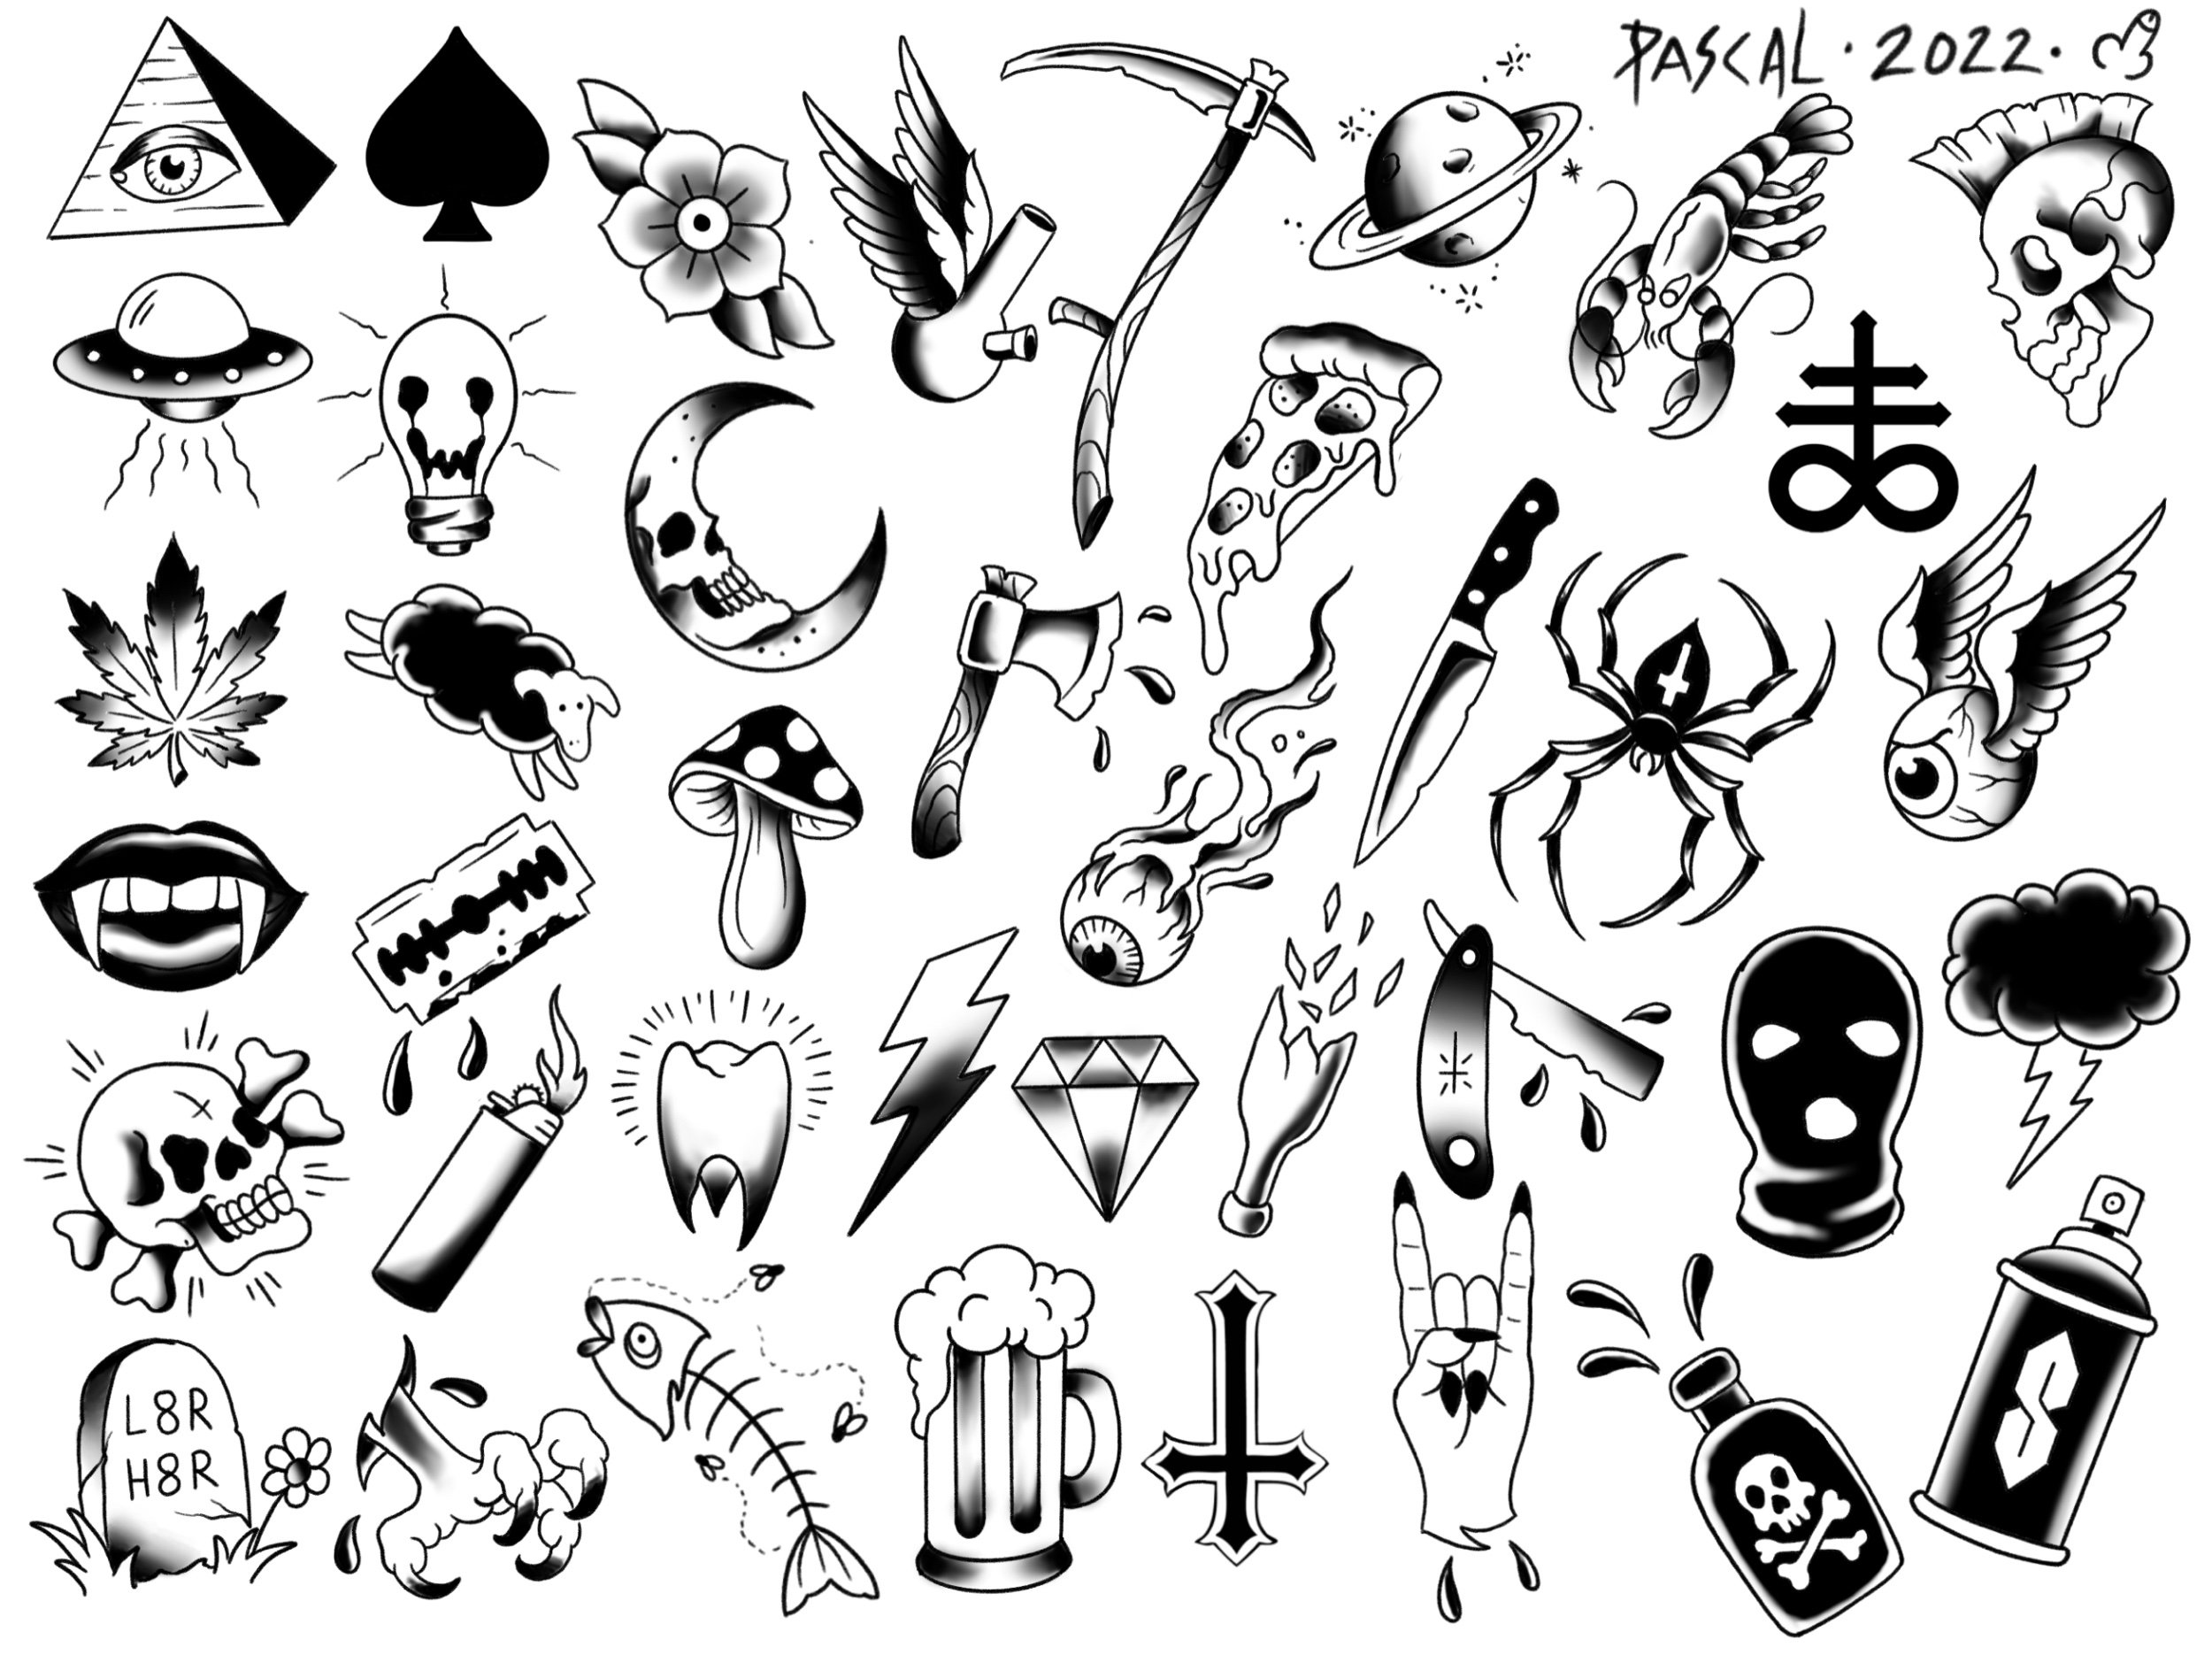 20 AK47 Tattoo Ideas That Will Keep You Feeling Badass  100 Tattoos